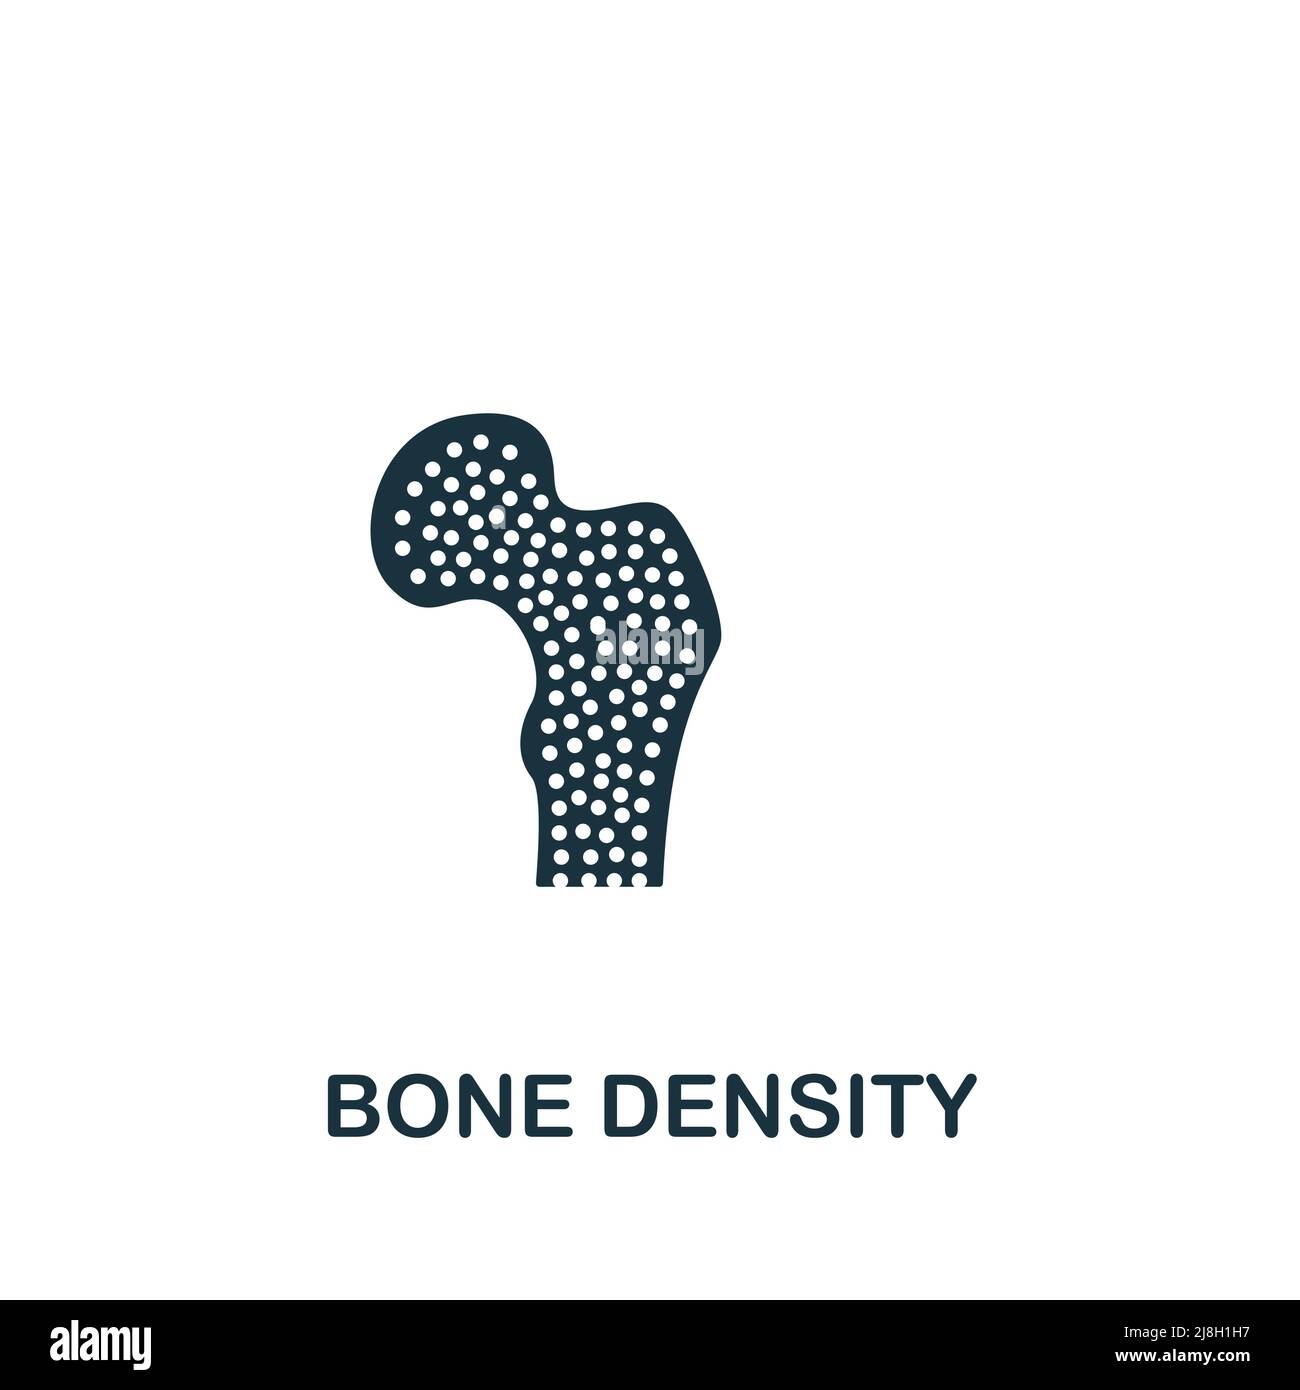 Bone Density icon. Monochrome simple Health Check icon for templates, web design and infographics Stock Vector